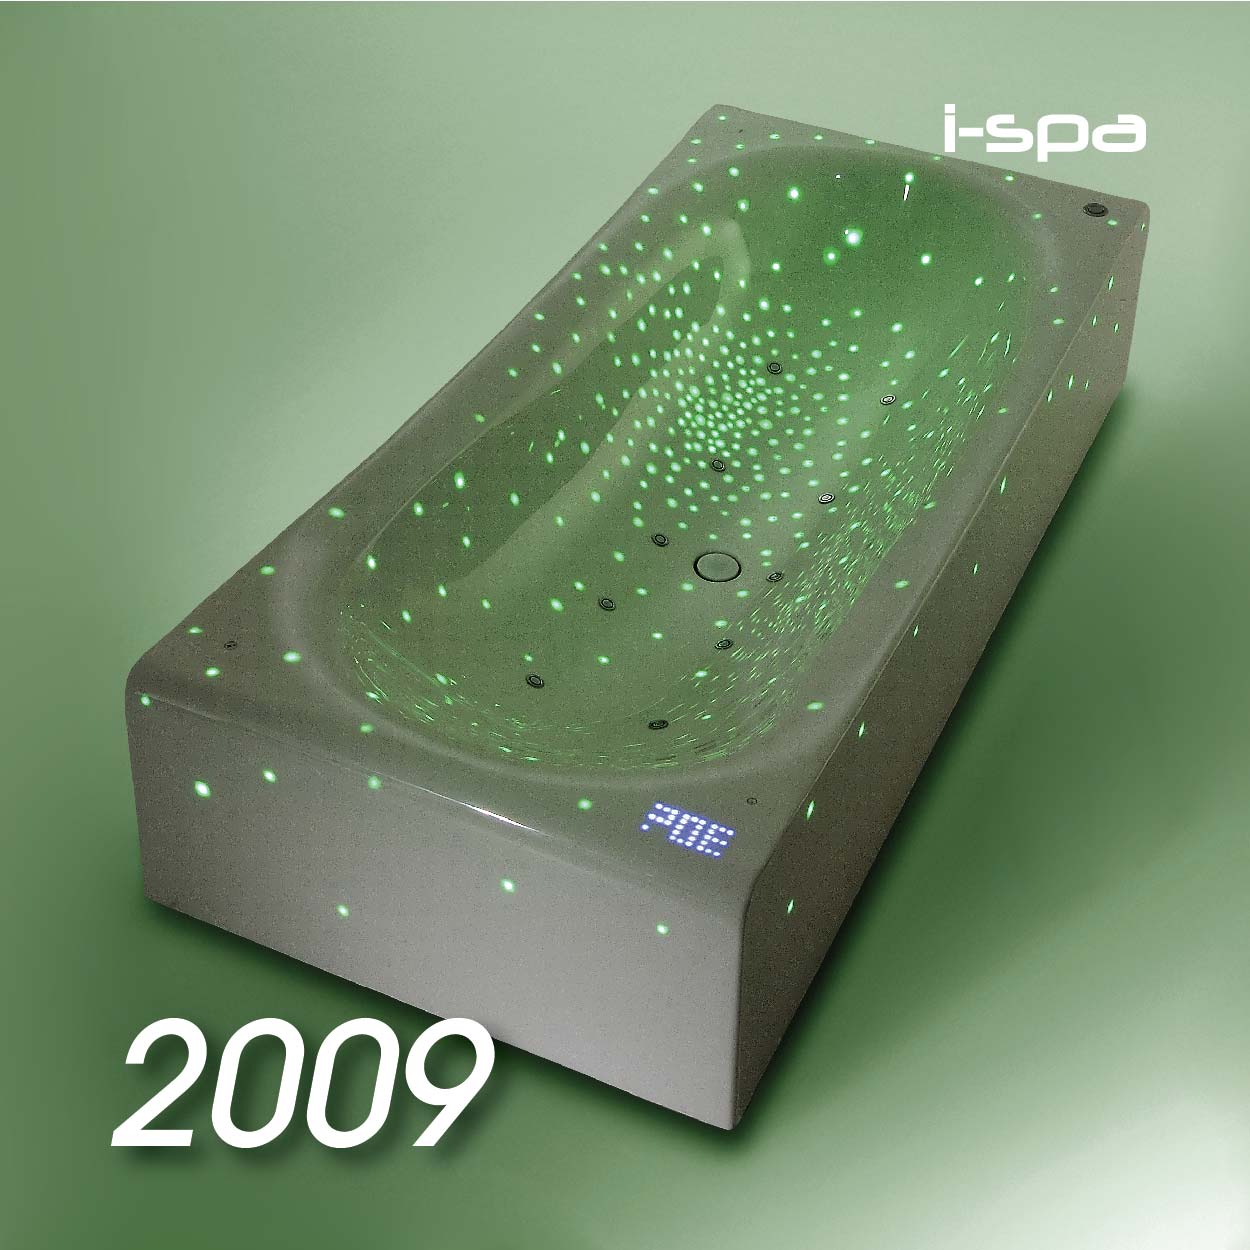 i-SPA Innovative Bathroom Product Award 2009